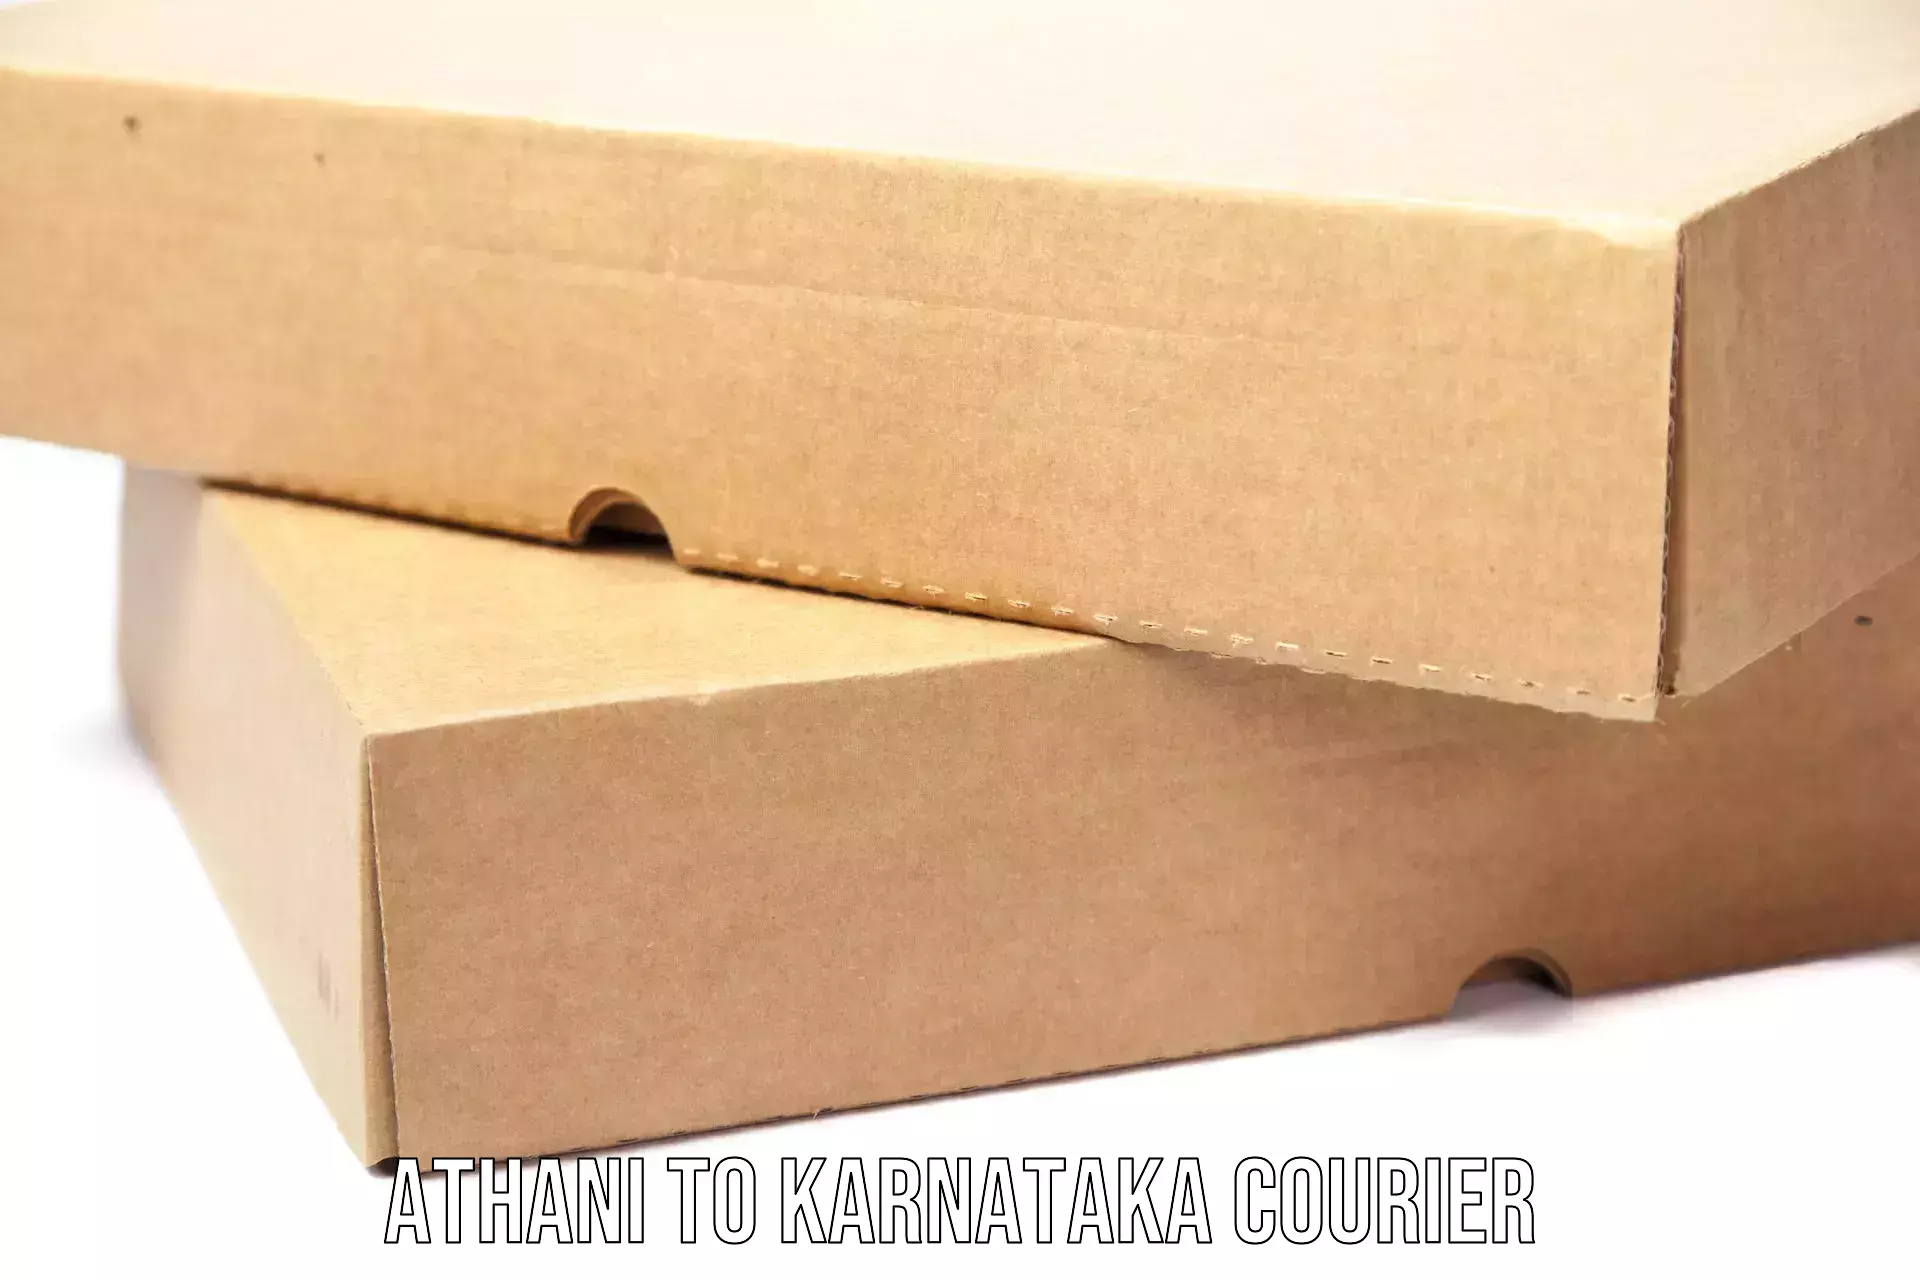 Shipping and handling Athani to Karnataka